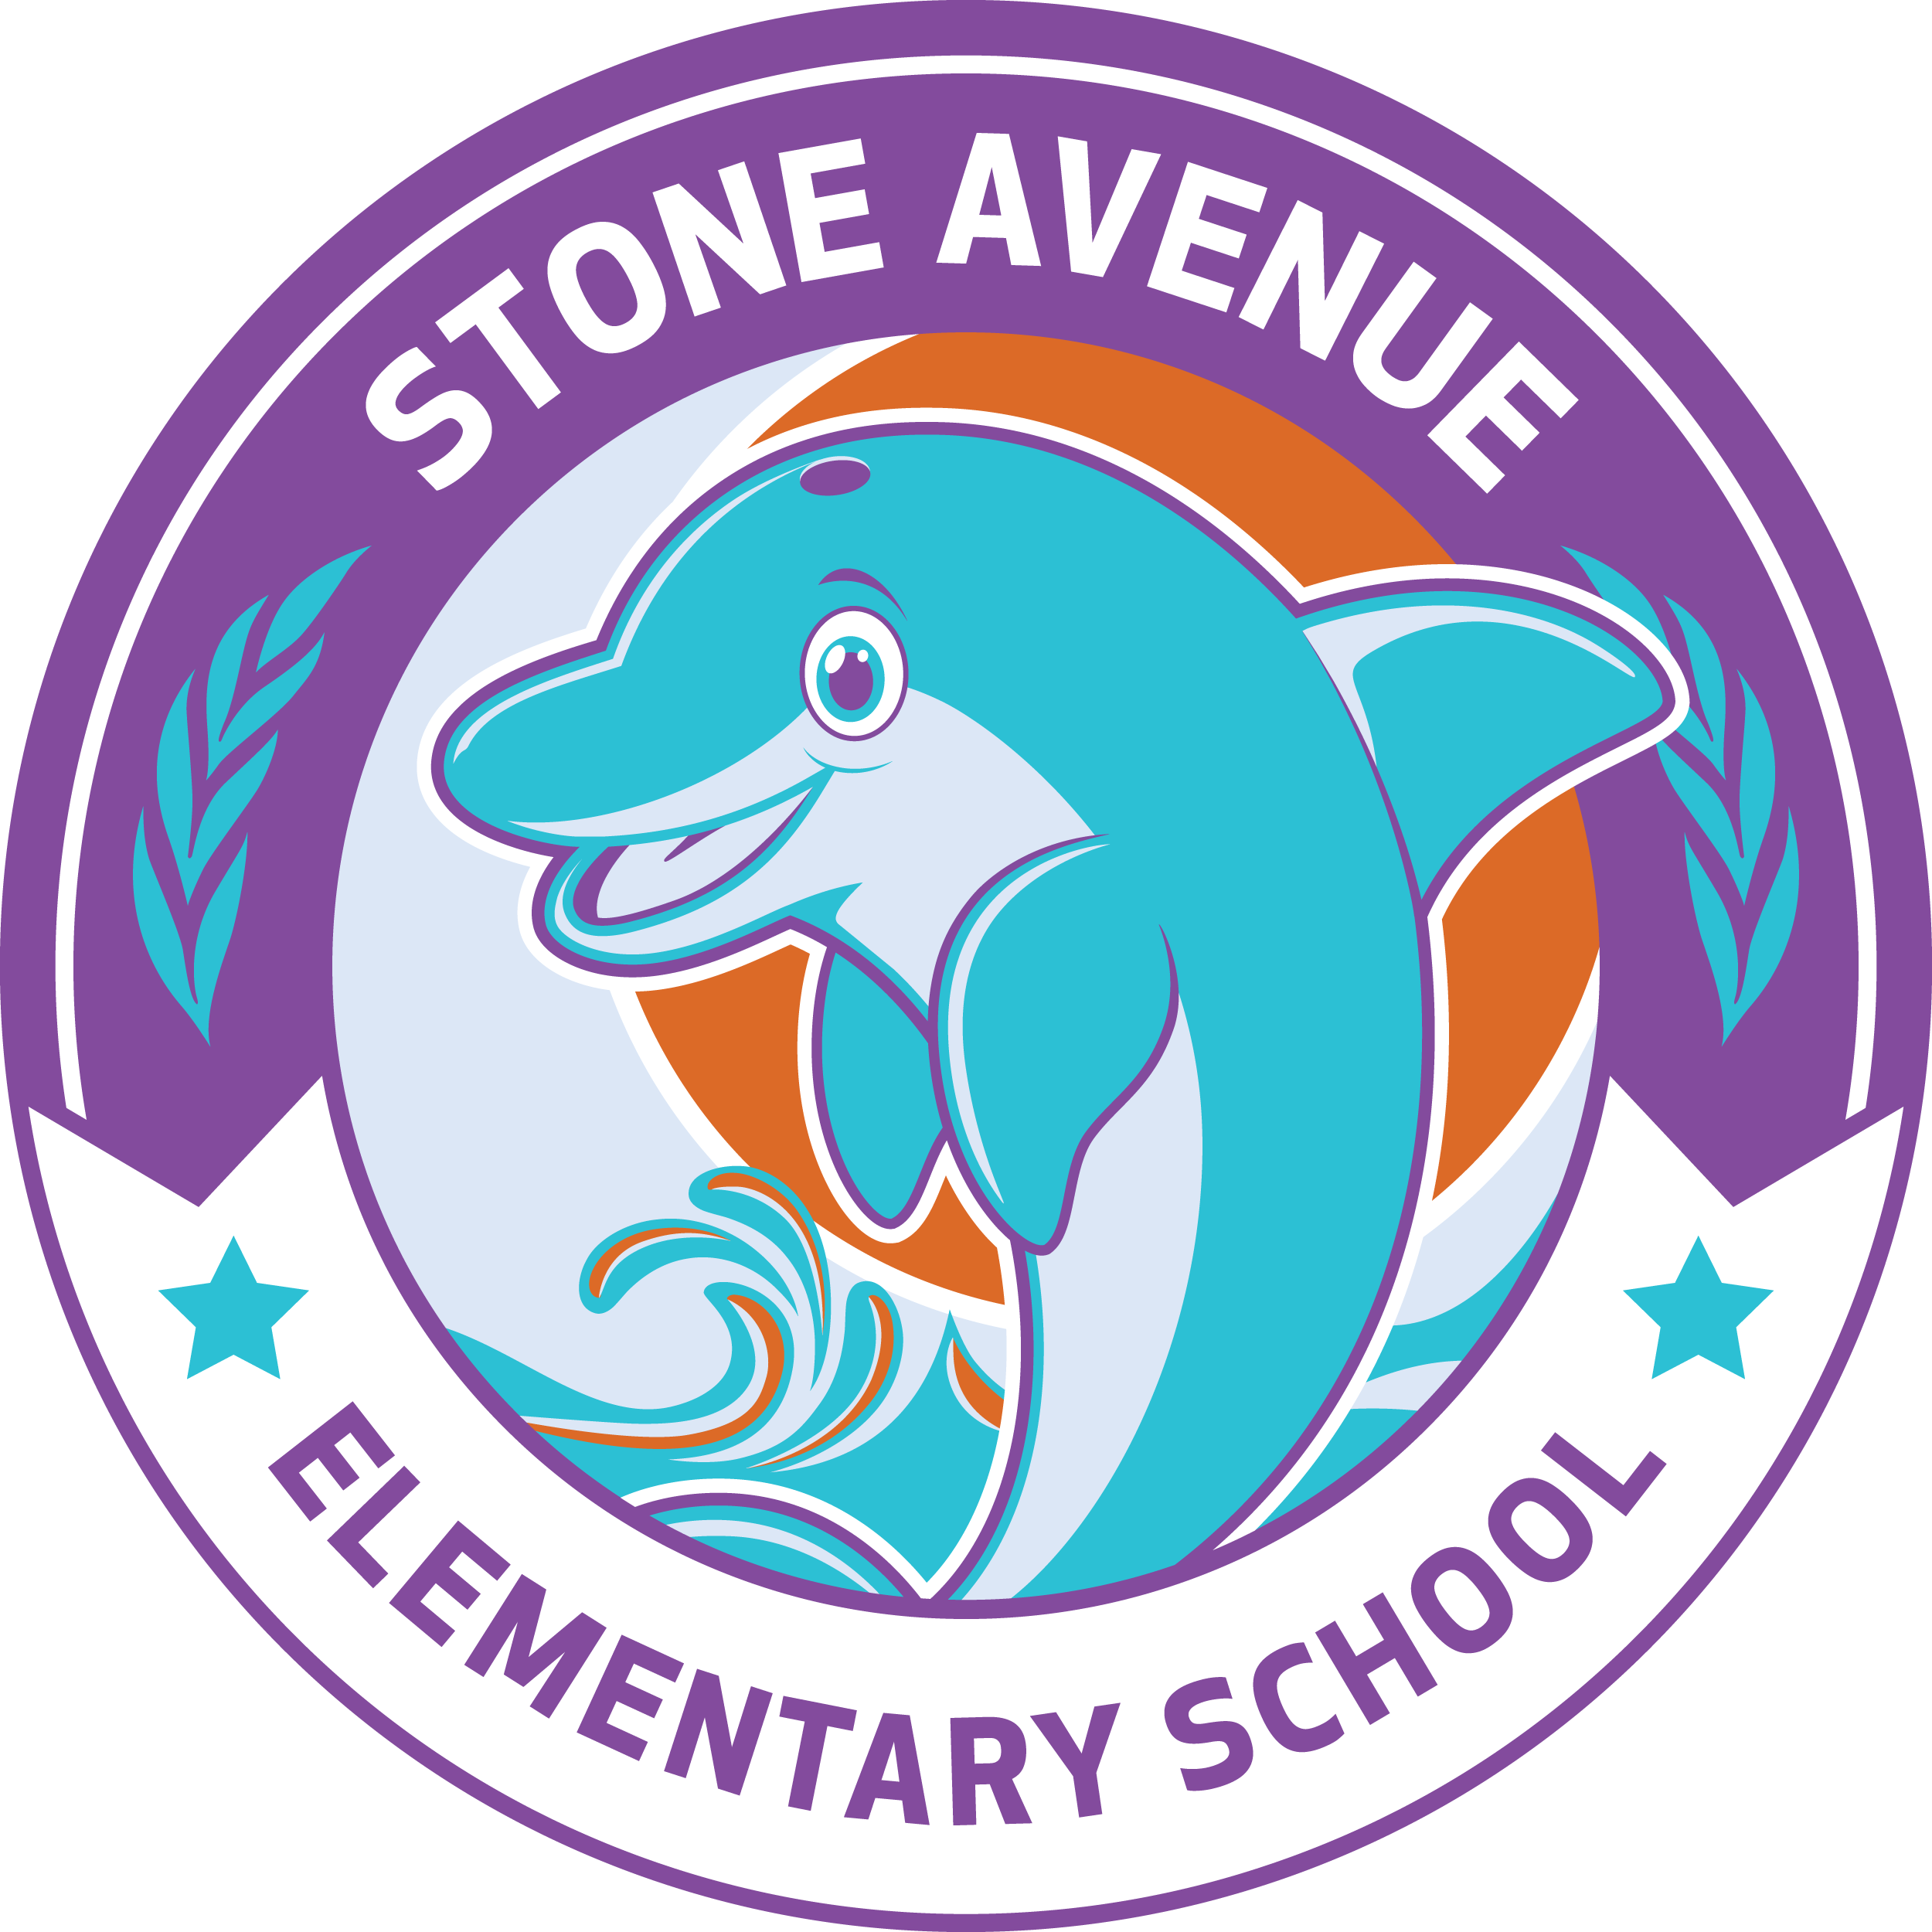 Stone Avenue Elementary